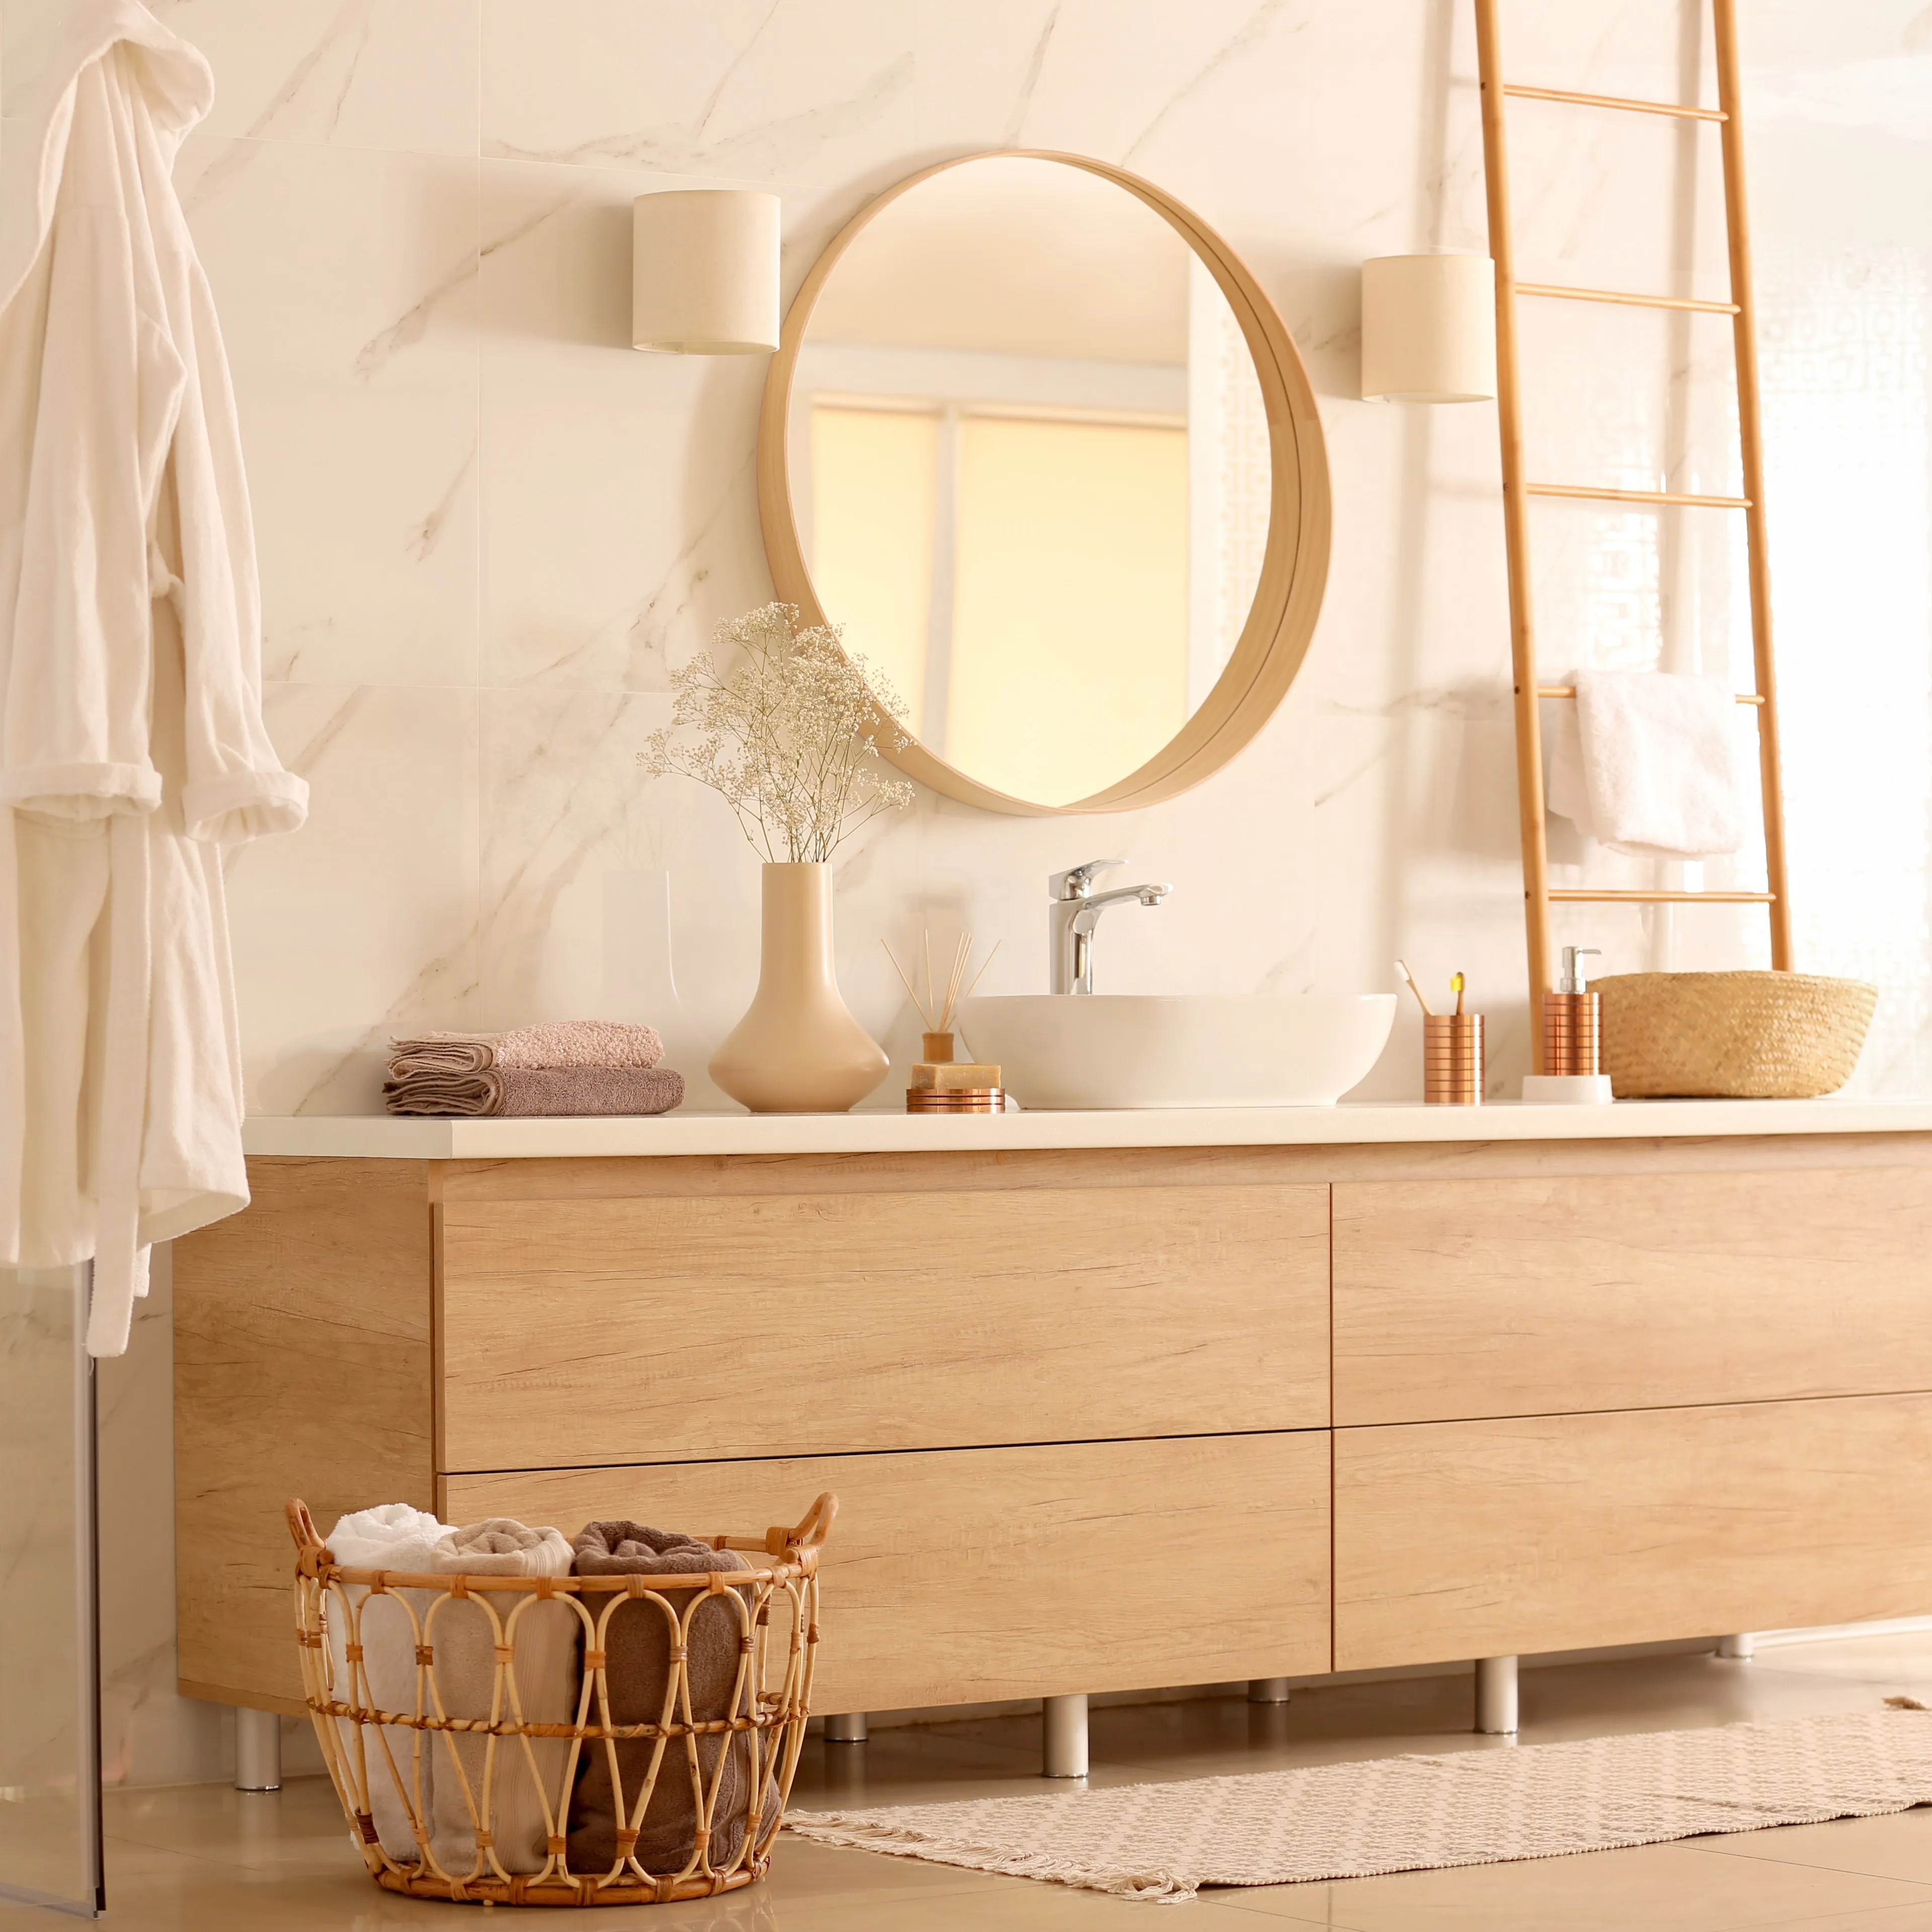 Buy Bathroom Vanity Top For Sale Product On Alibabacom